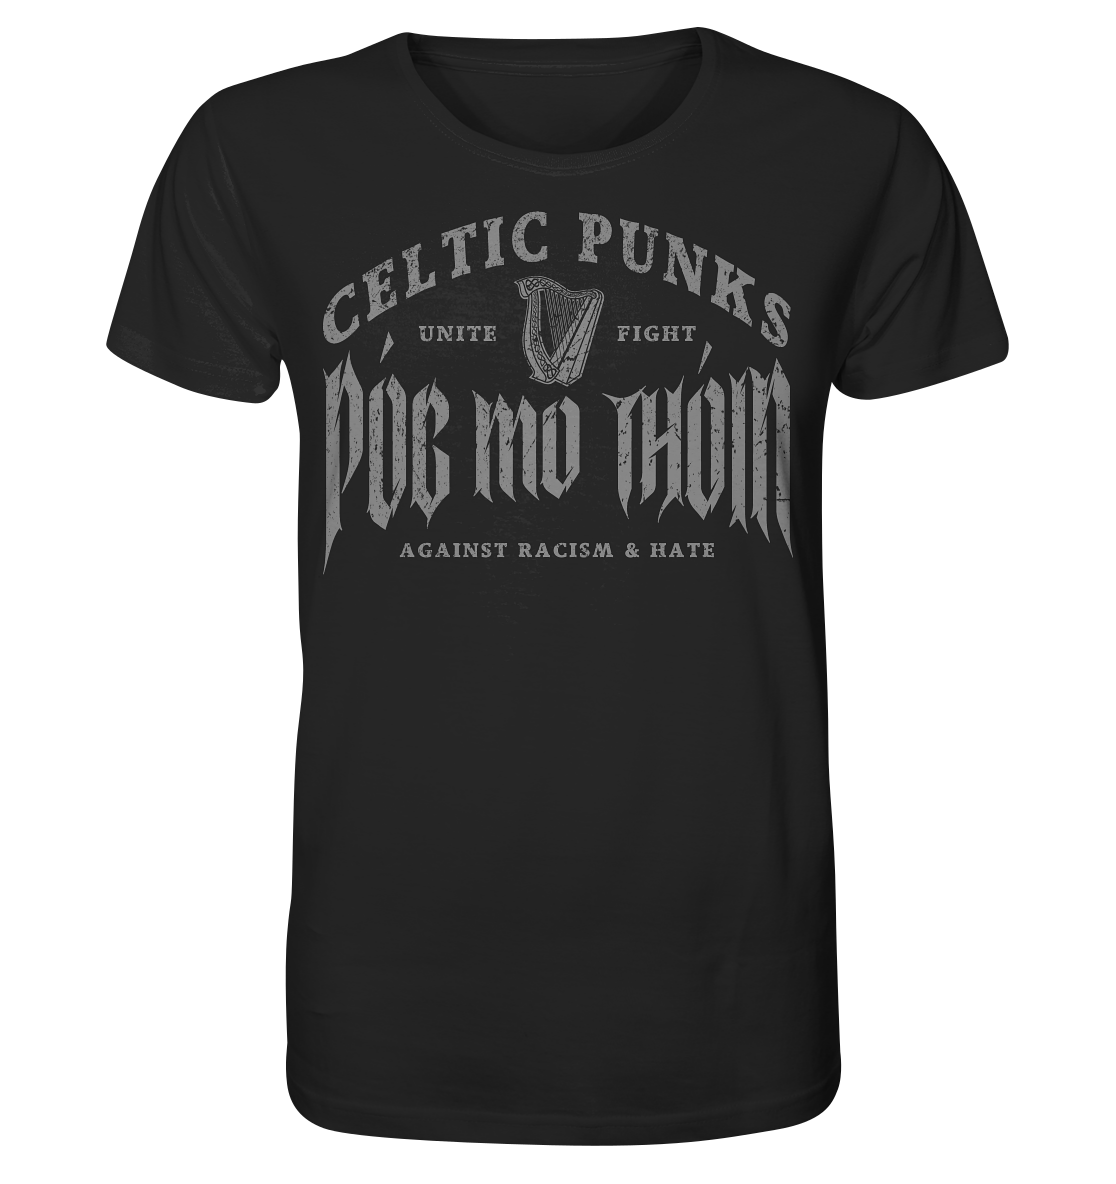 Póg Mo Thóin Streetwear "Celtic Punks Against Racism & Hate / Unite & Fight" - Organic Shirt